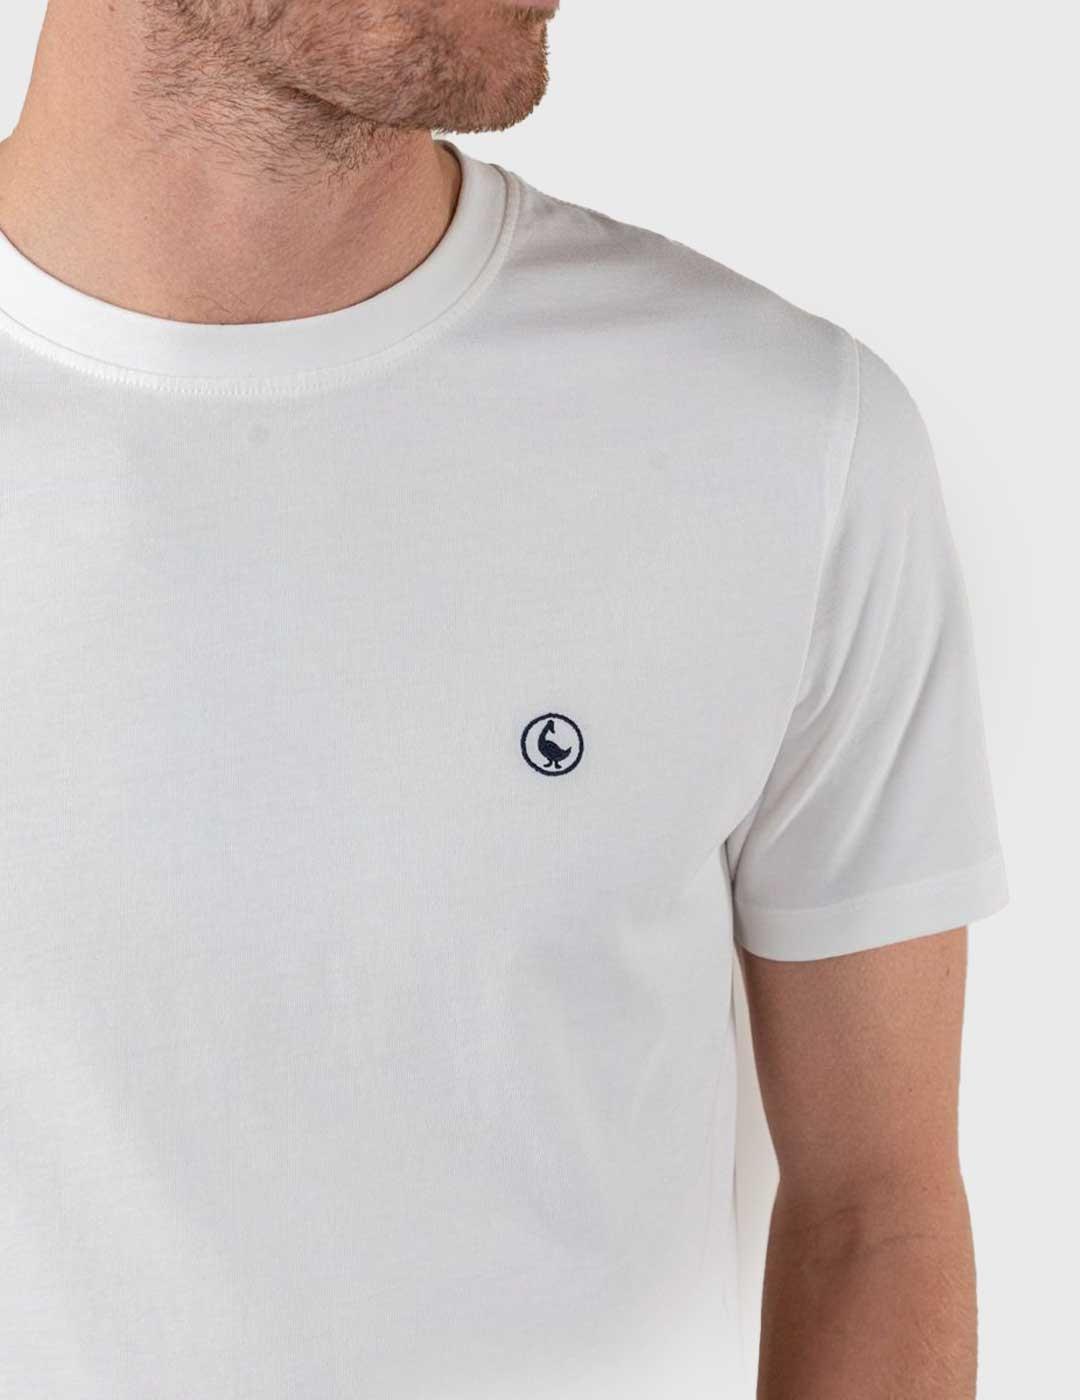 El Ganso Camiseta Garment Dyed blanca para hombre